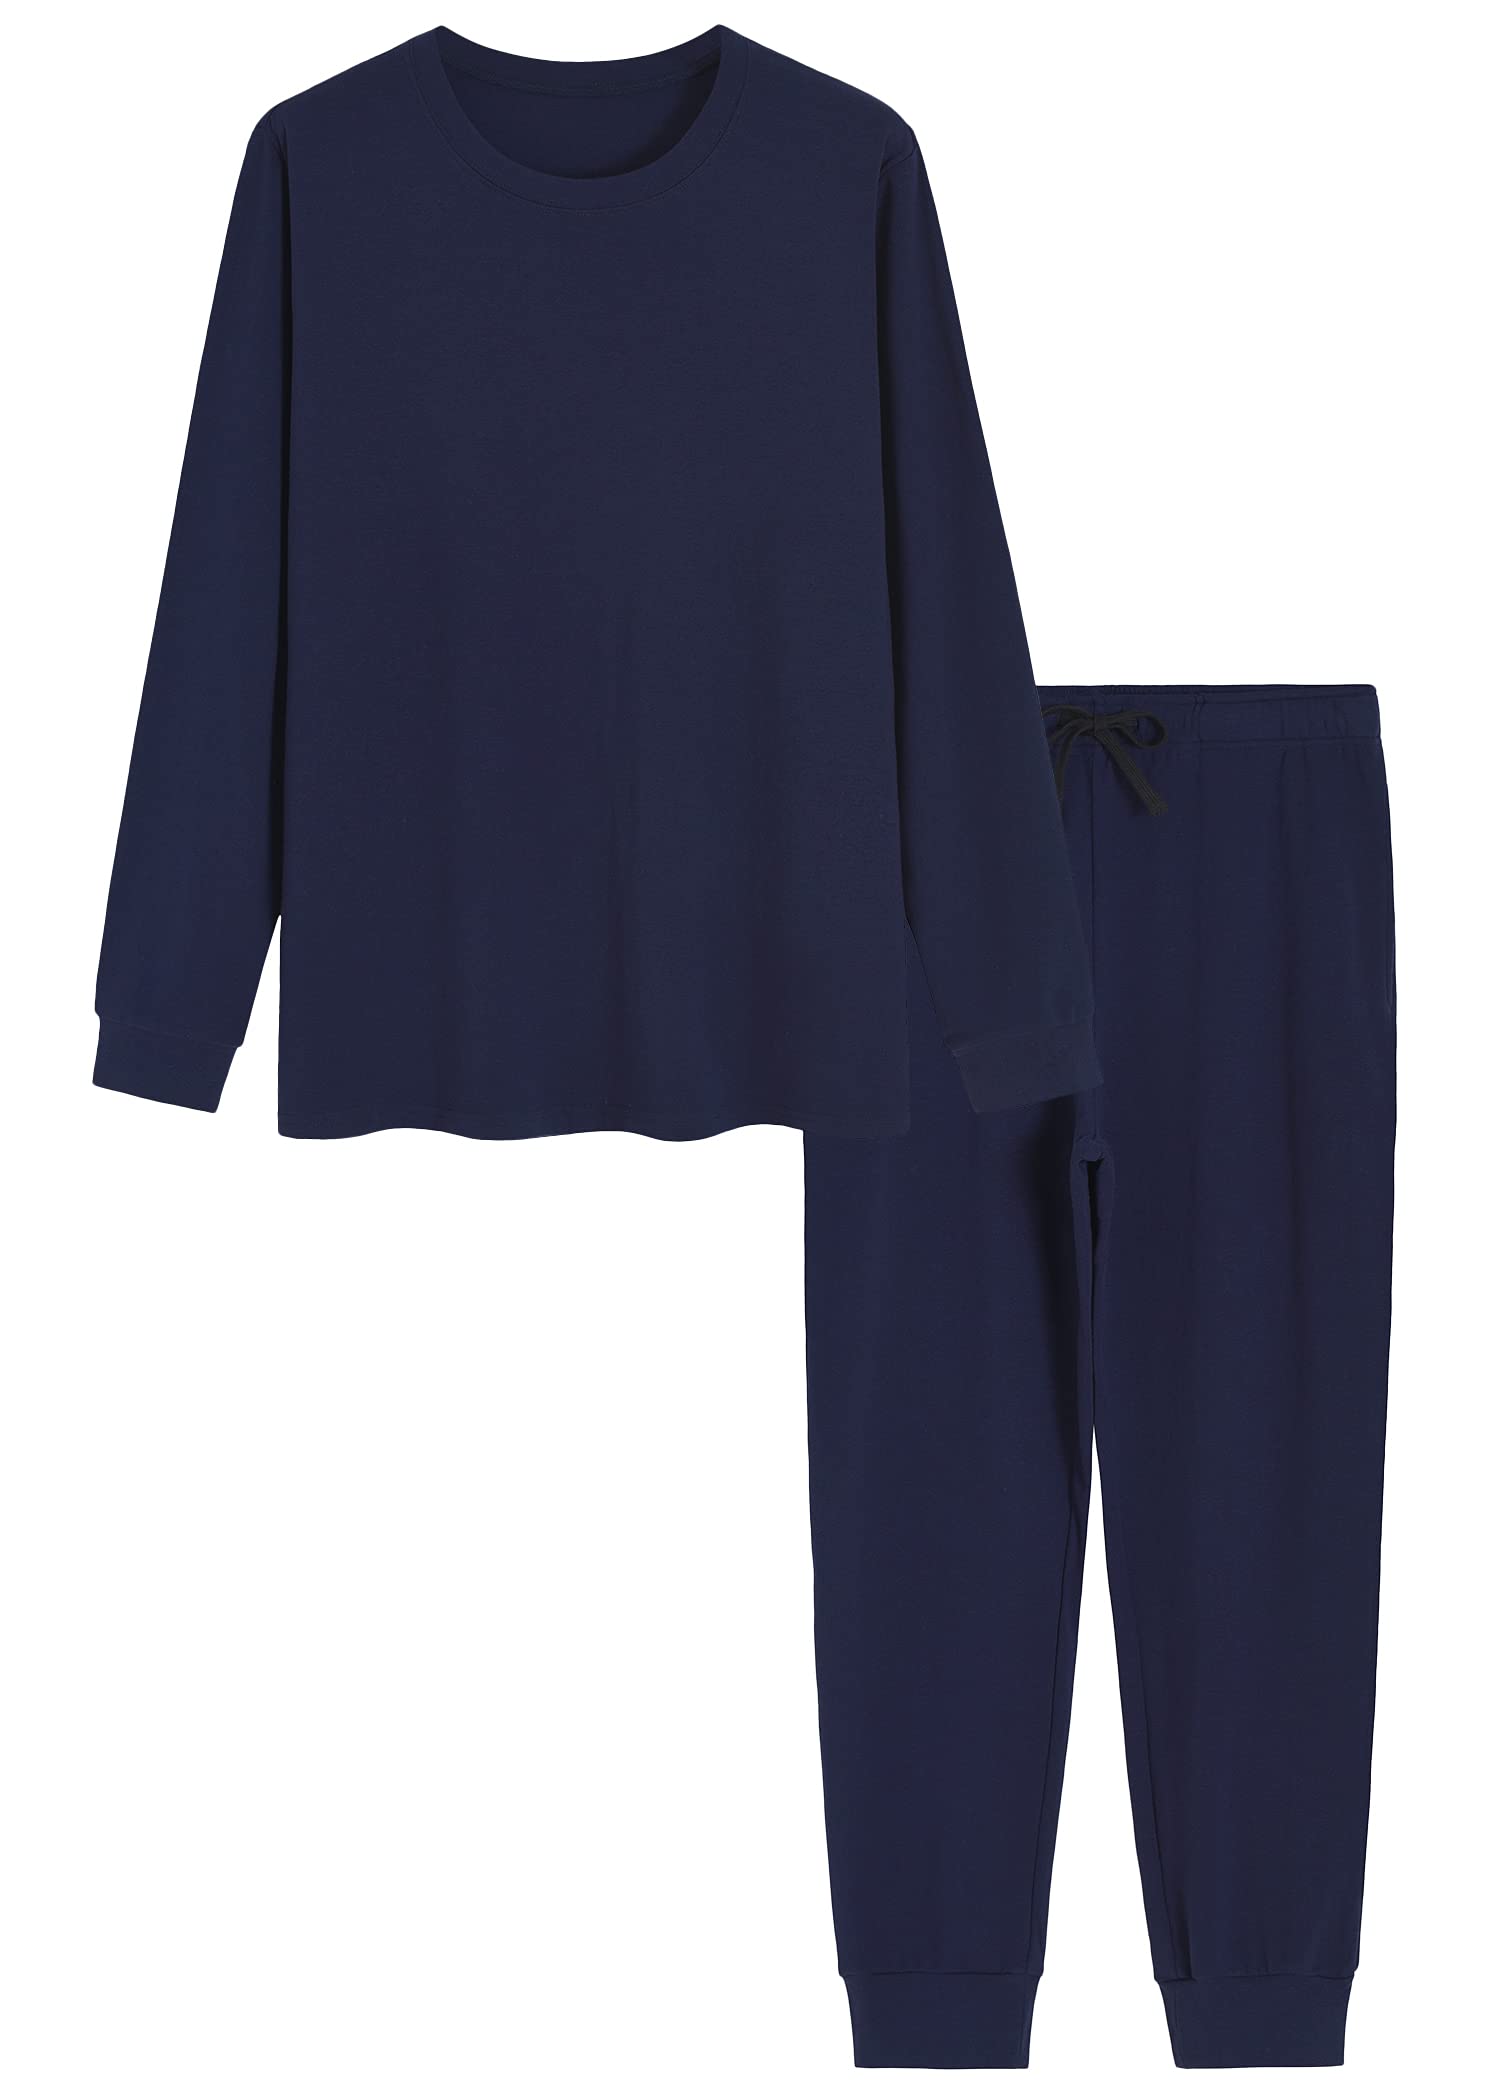 Men\'s Long Sleeves Set Pants – Pajama Sleep Latuza Jogger Lounge Top